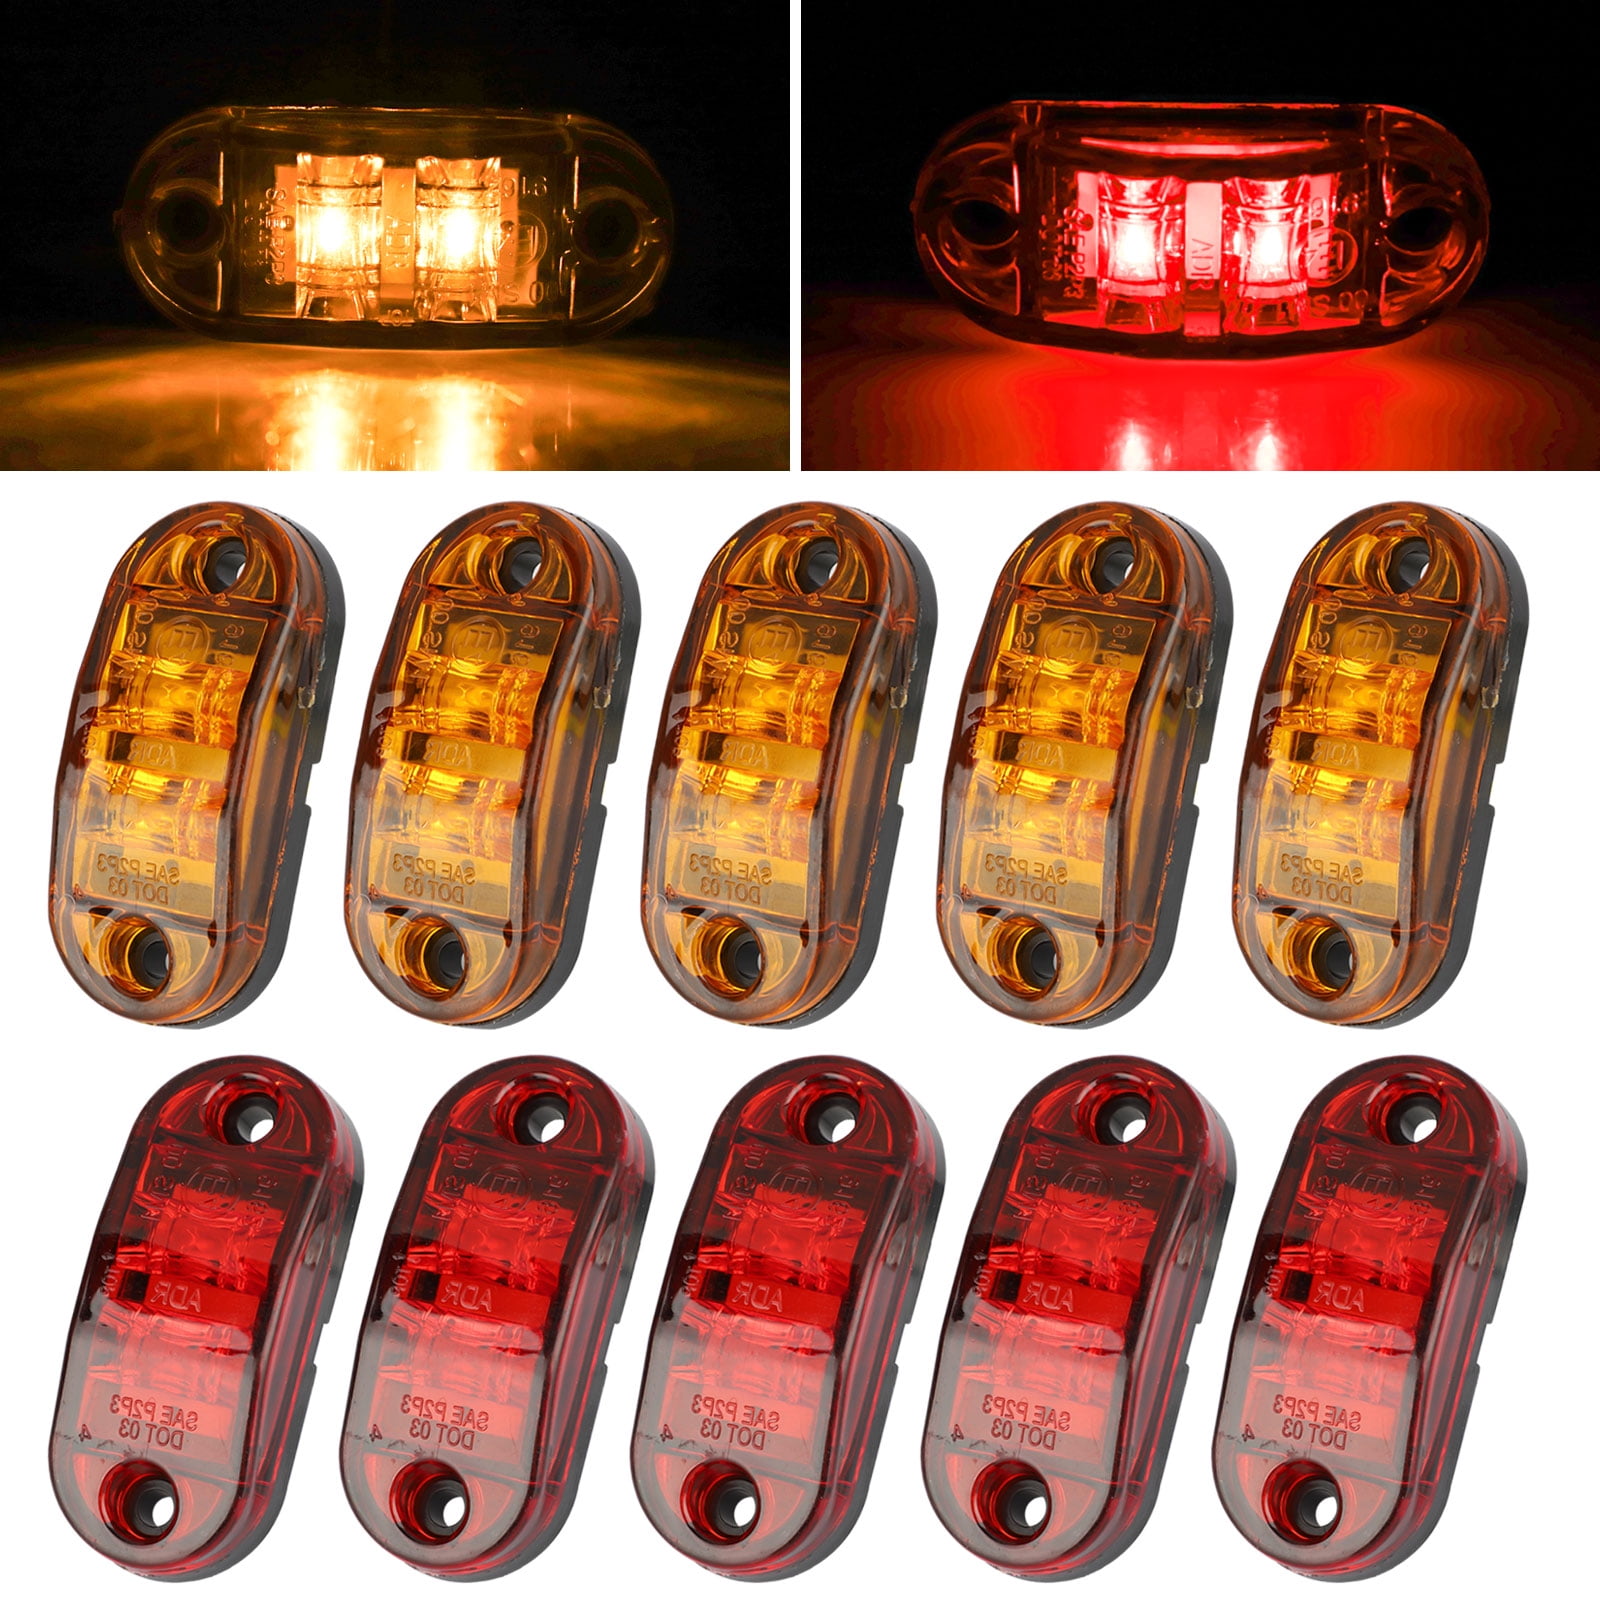 6 Amber & 6 Red Lights Dream Lighting 12V DC 2.5inch Round LED Side Marker Lights for Automotive RV Trailer Truck Clearance Indicator Front/Rear Side 